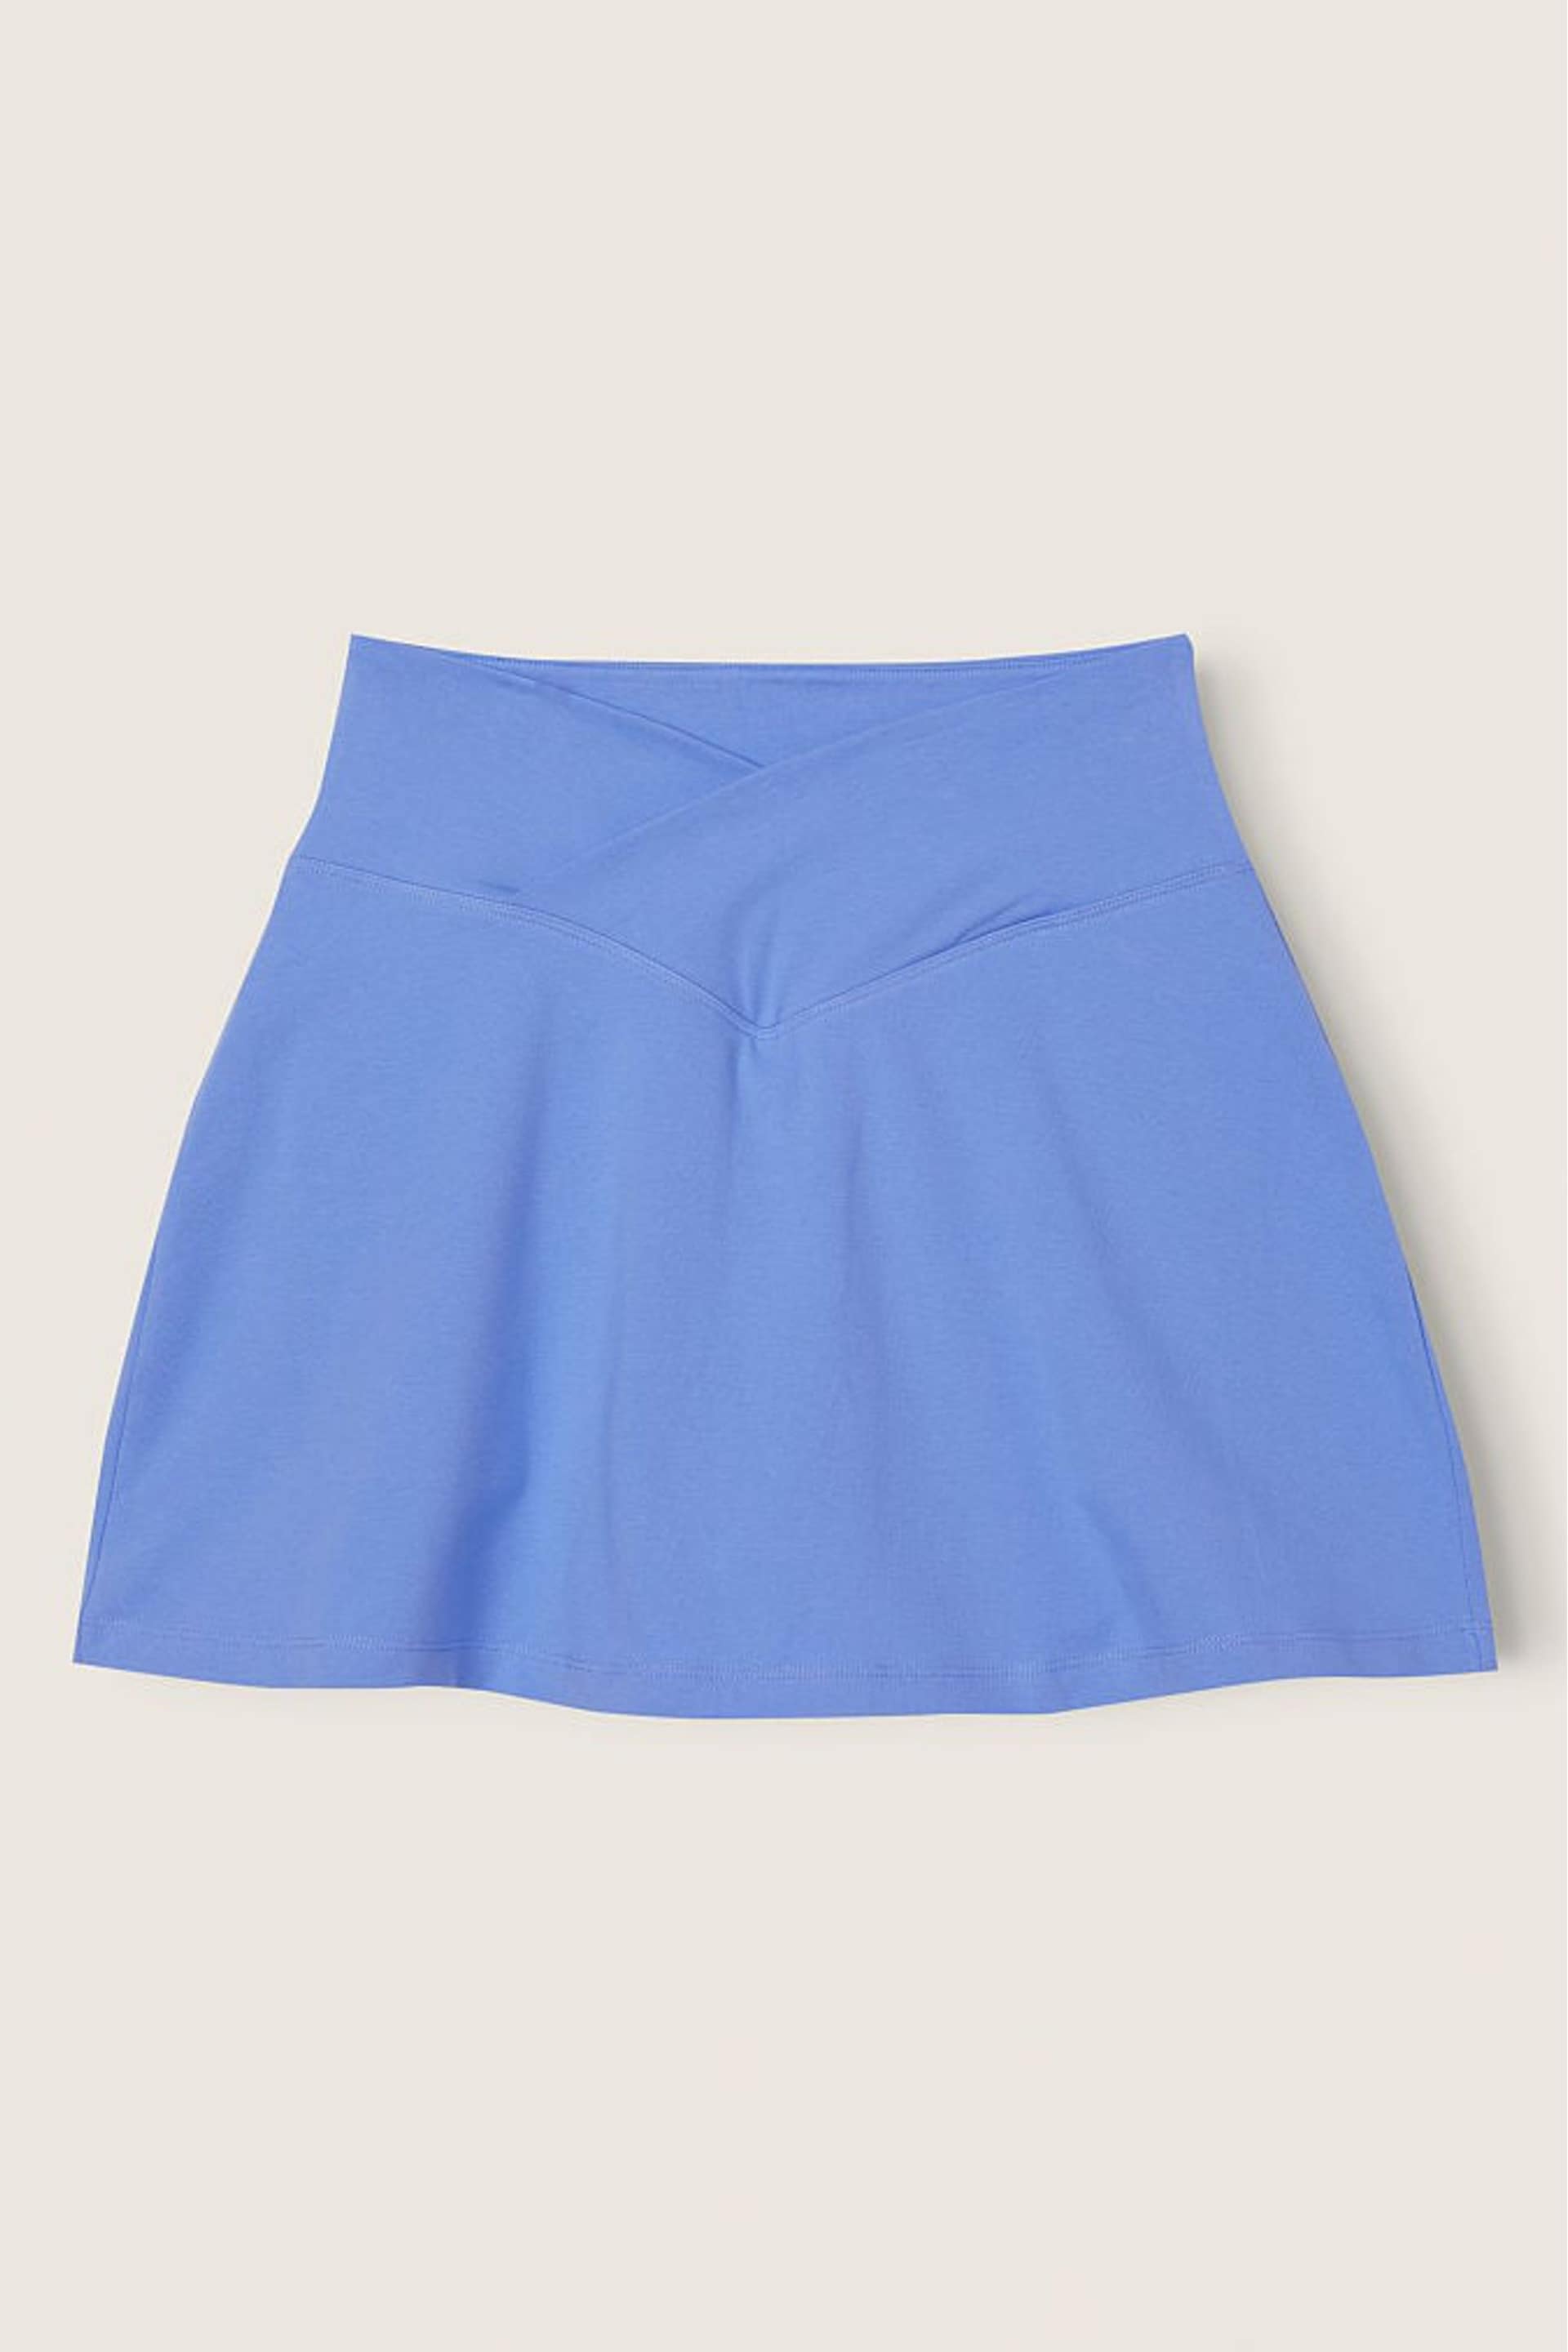 Victoria's Secret PINK Cornflour Blue High Waist Skirt - Image 4 of 5